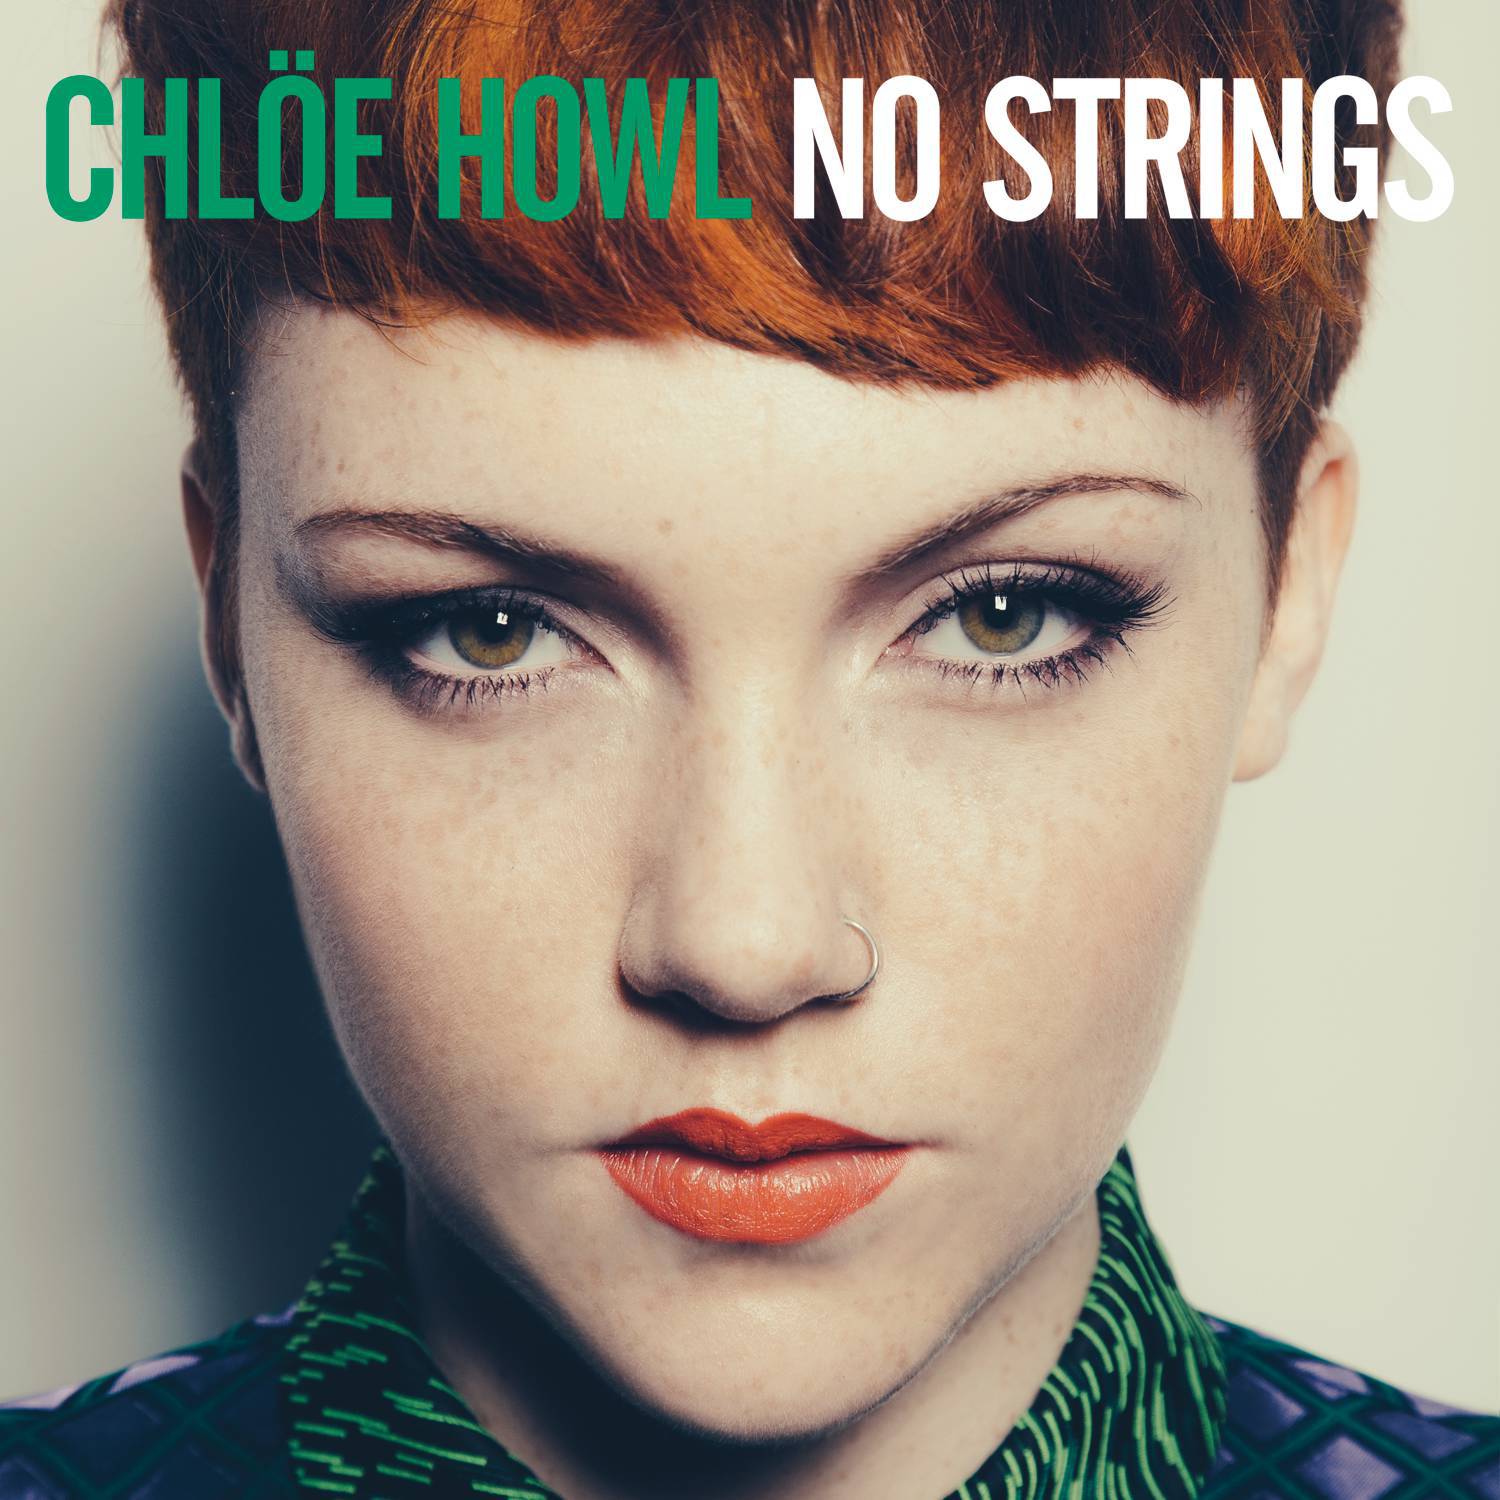 Chlöe Howl - No Strings (Brolin Remix)